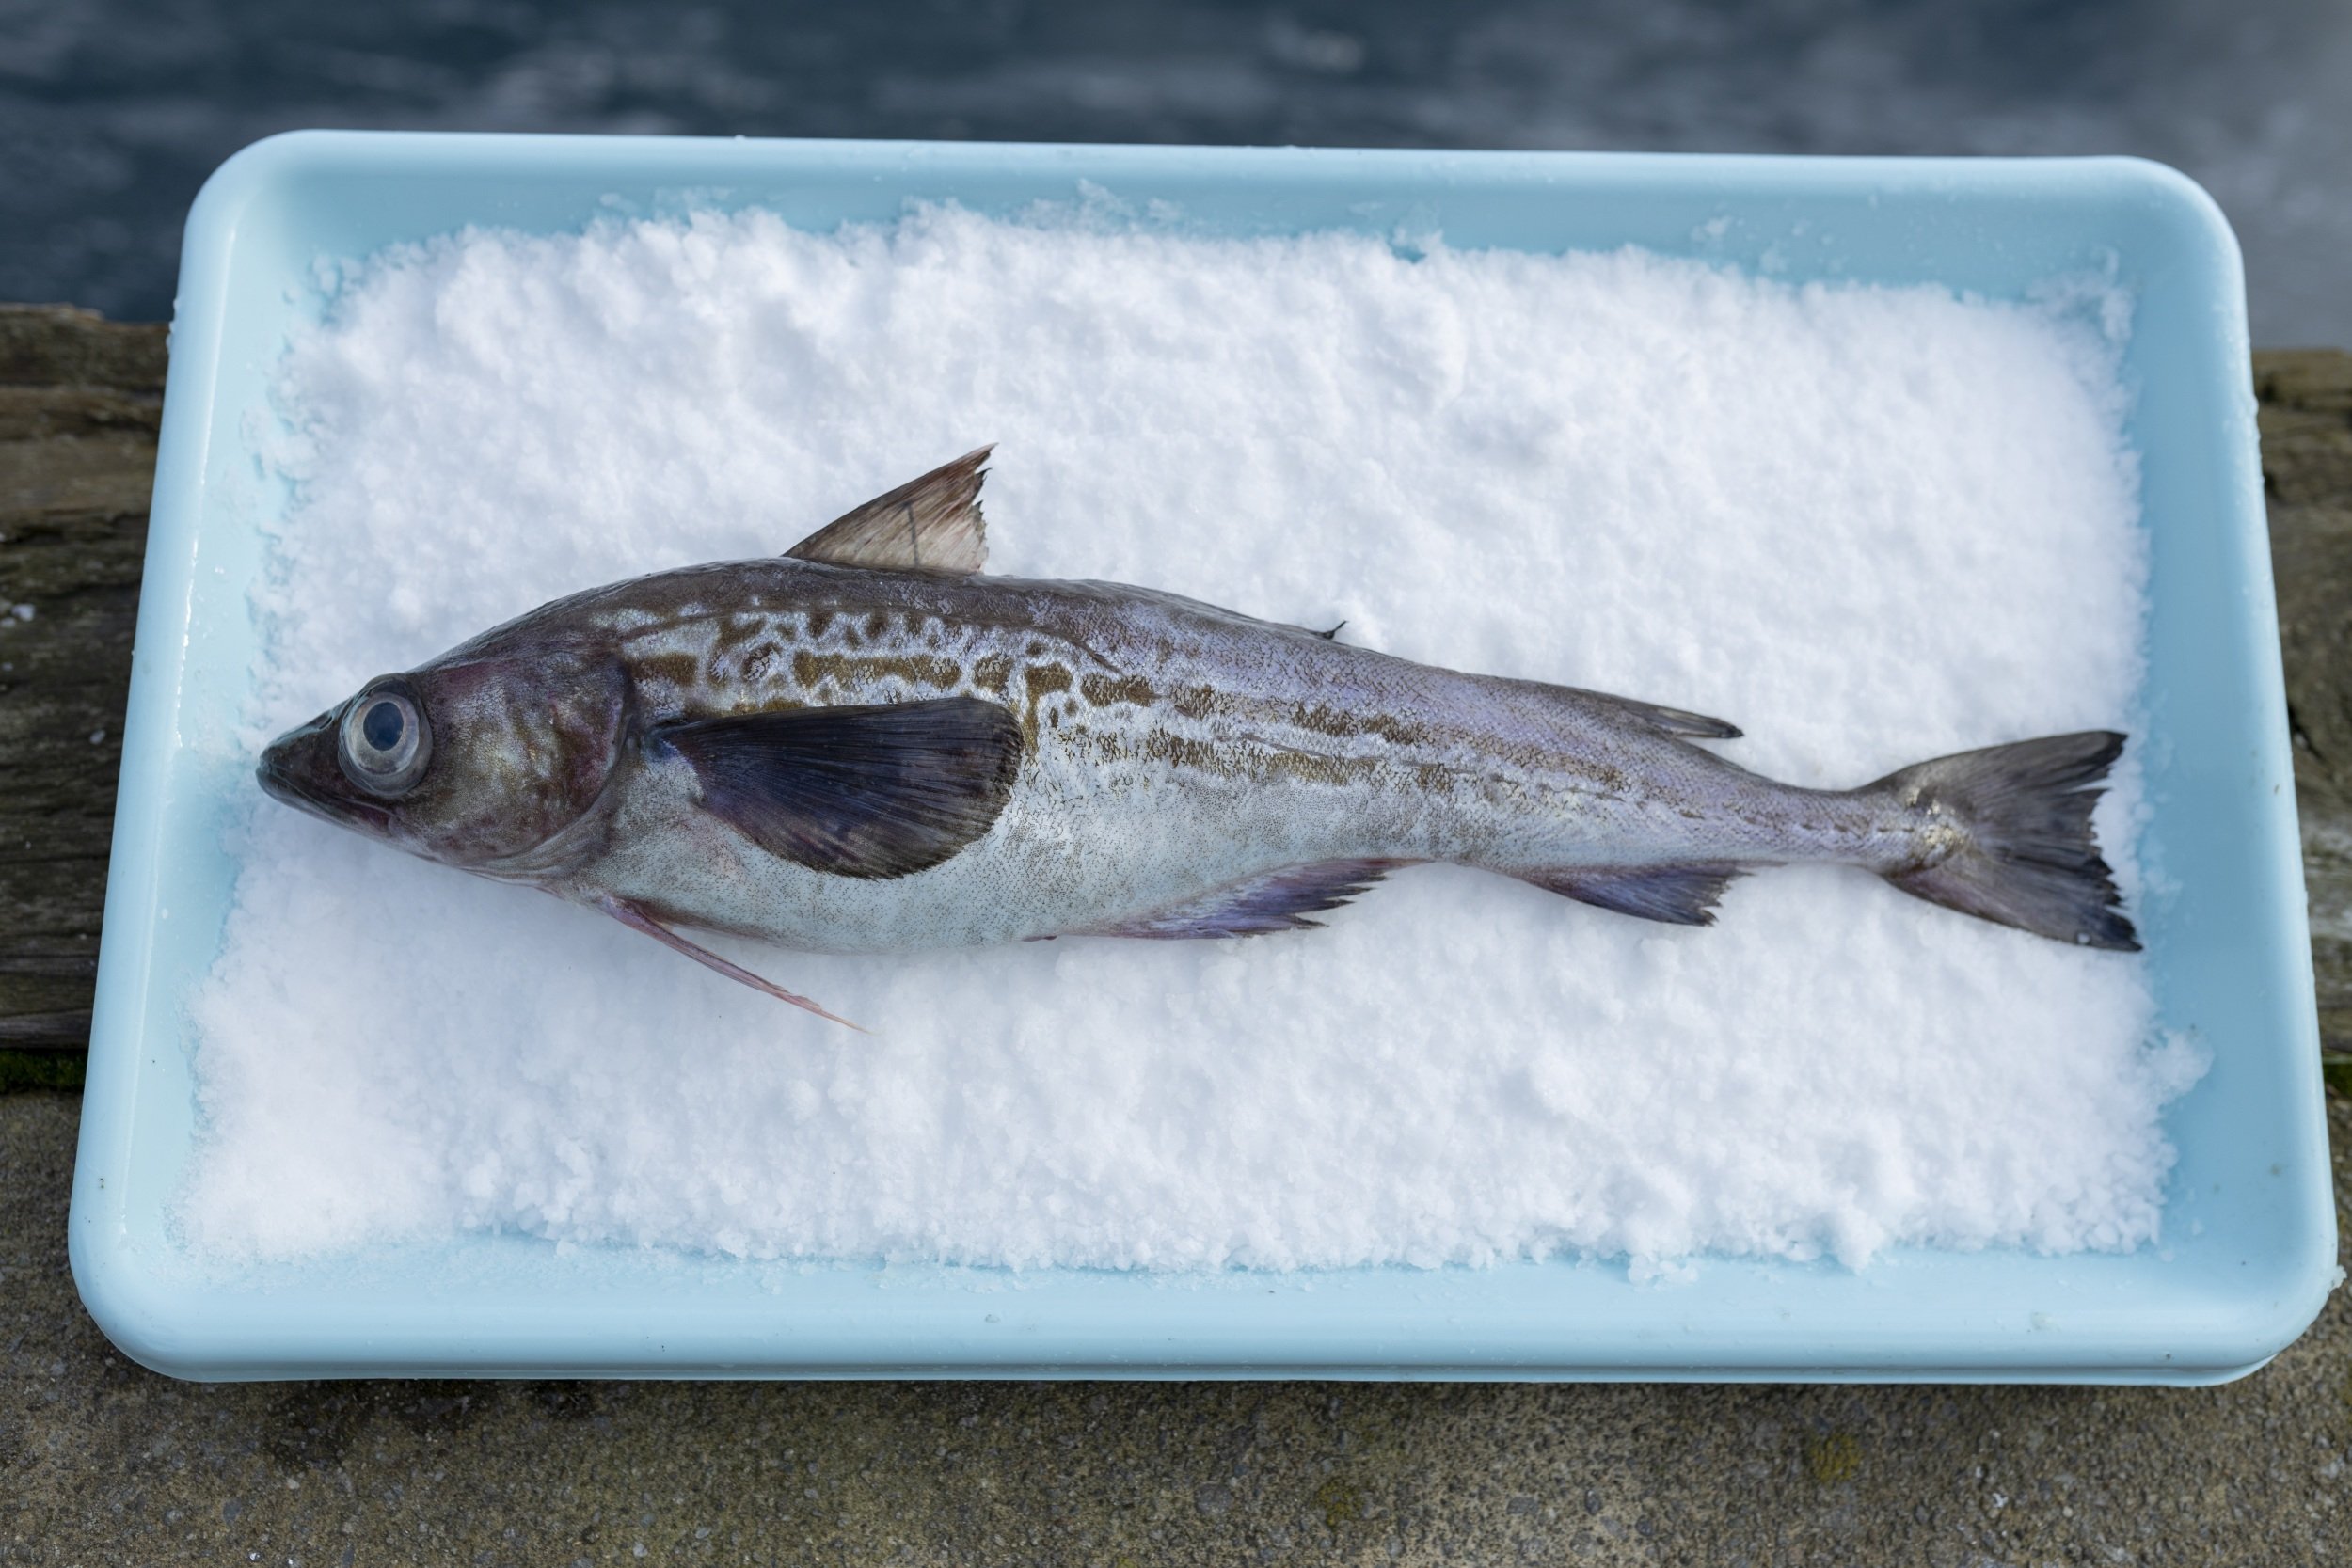 Canadian Saltfish, Cod, Pollock, Hake, Cusk, Ling, Mackerel, Herring, and  frozen.